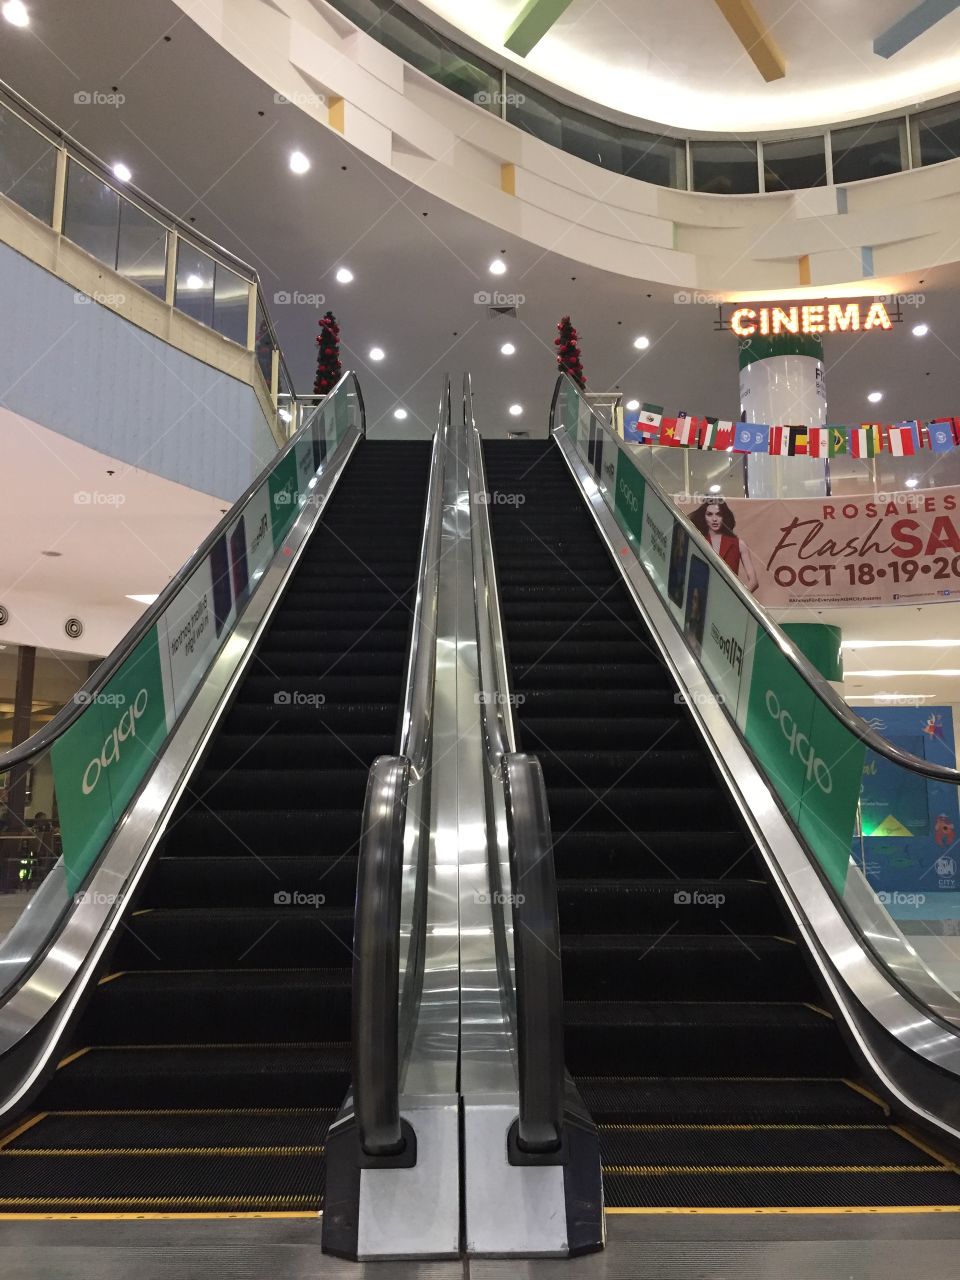 The lonely escalator